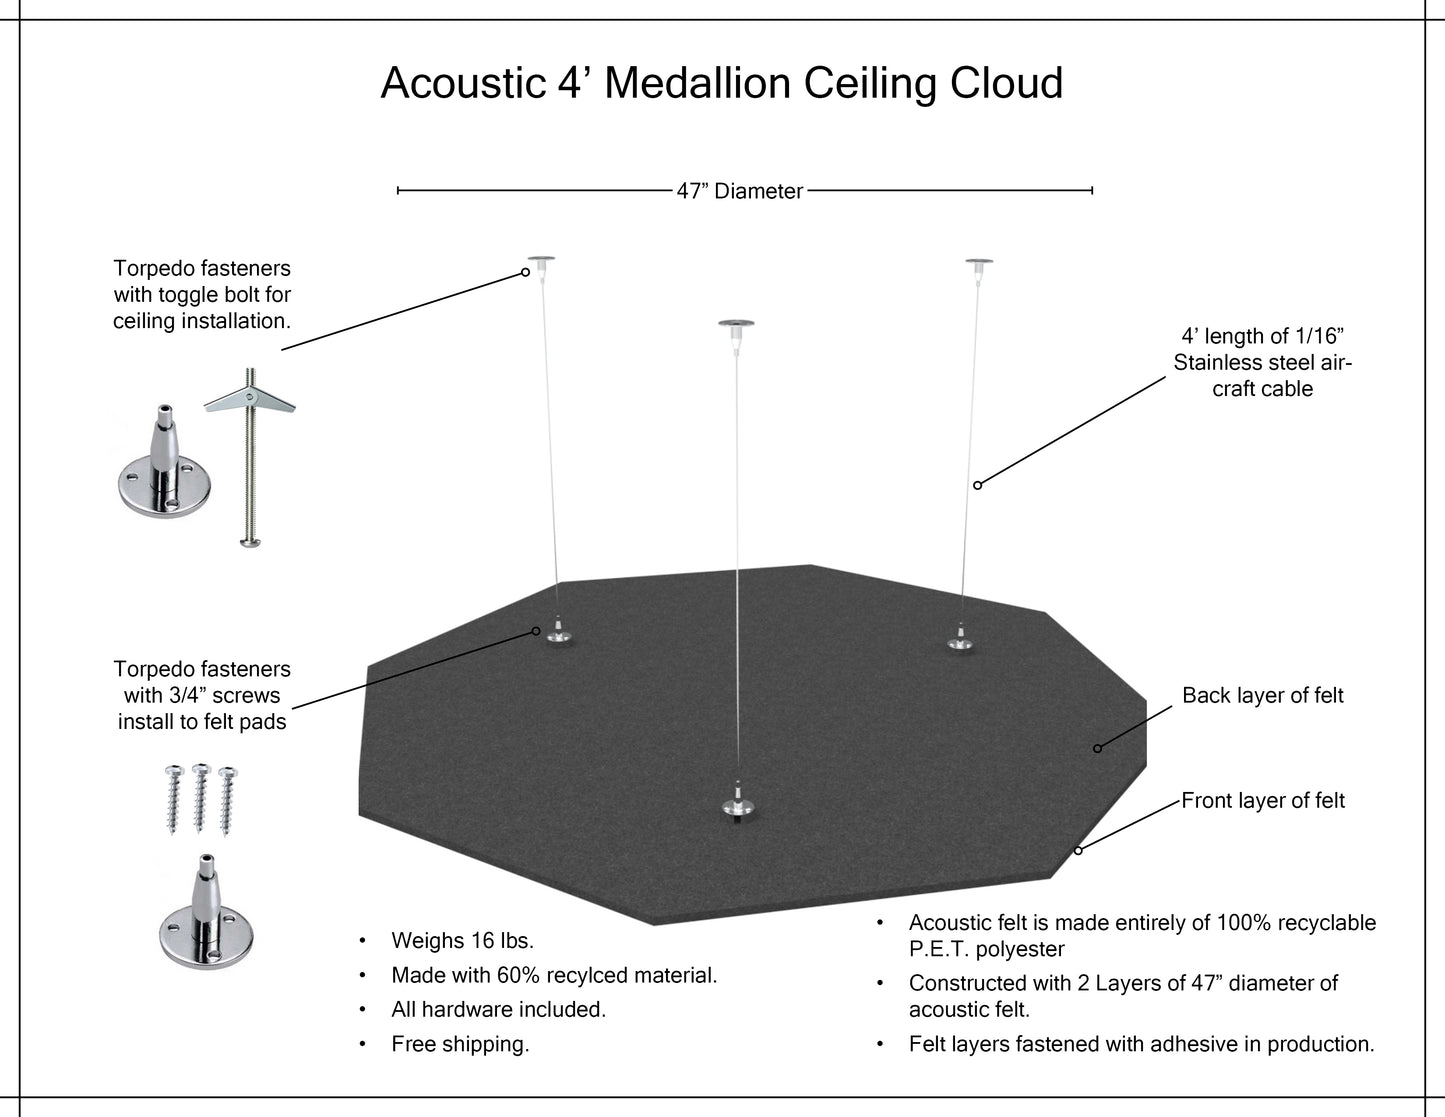 Medallion Acoustic Ceiling Cloud - Abandoned